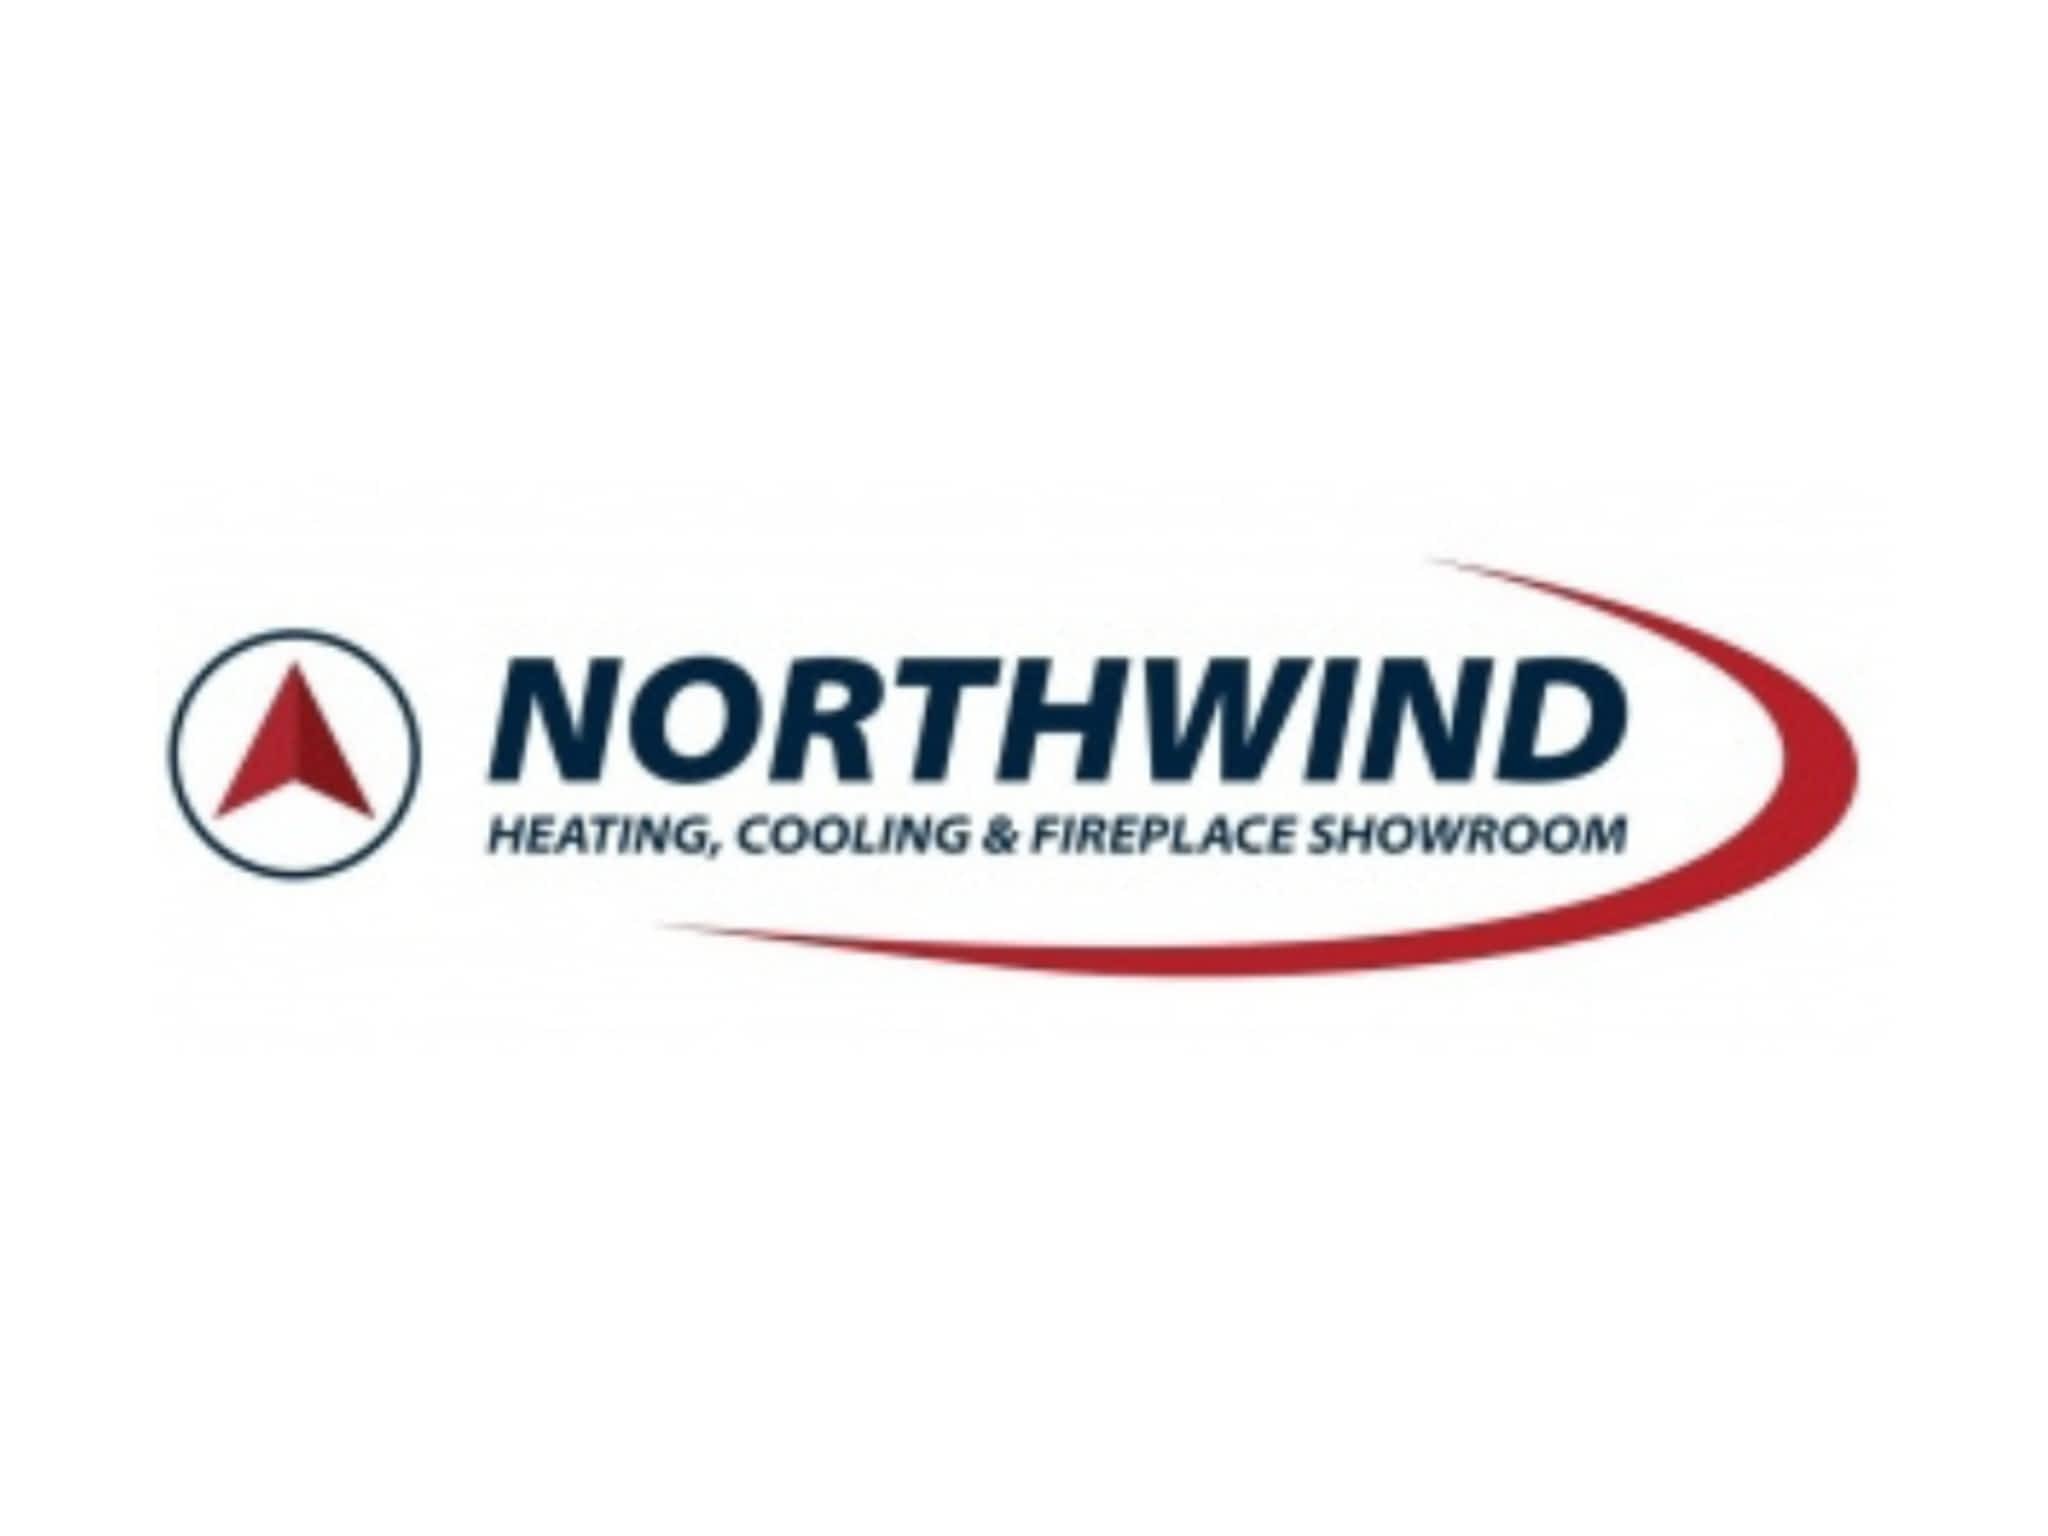 photo Northwind Heating Ltd.